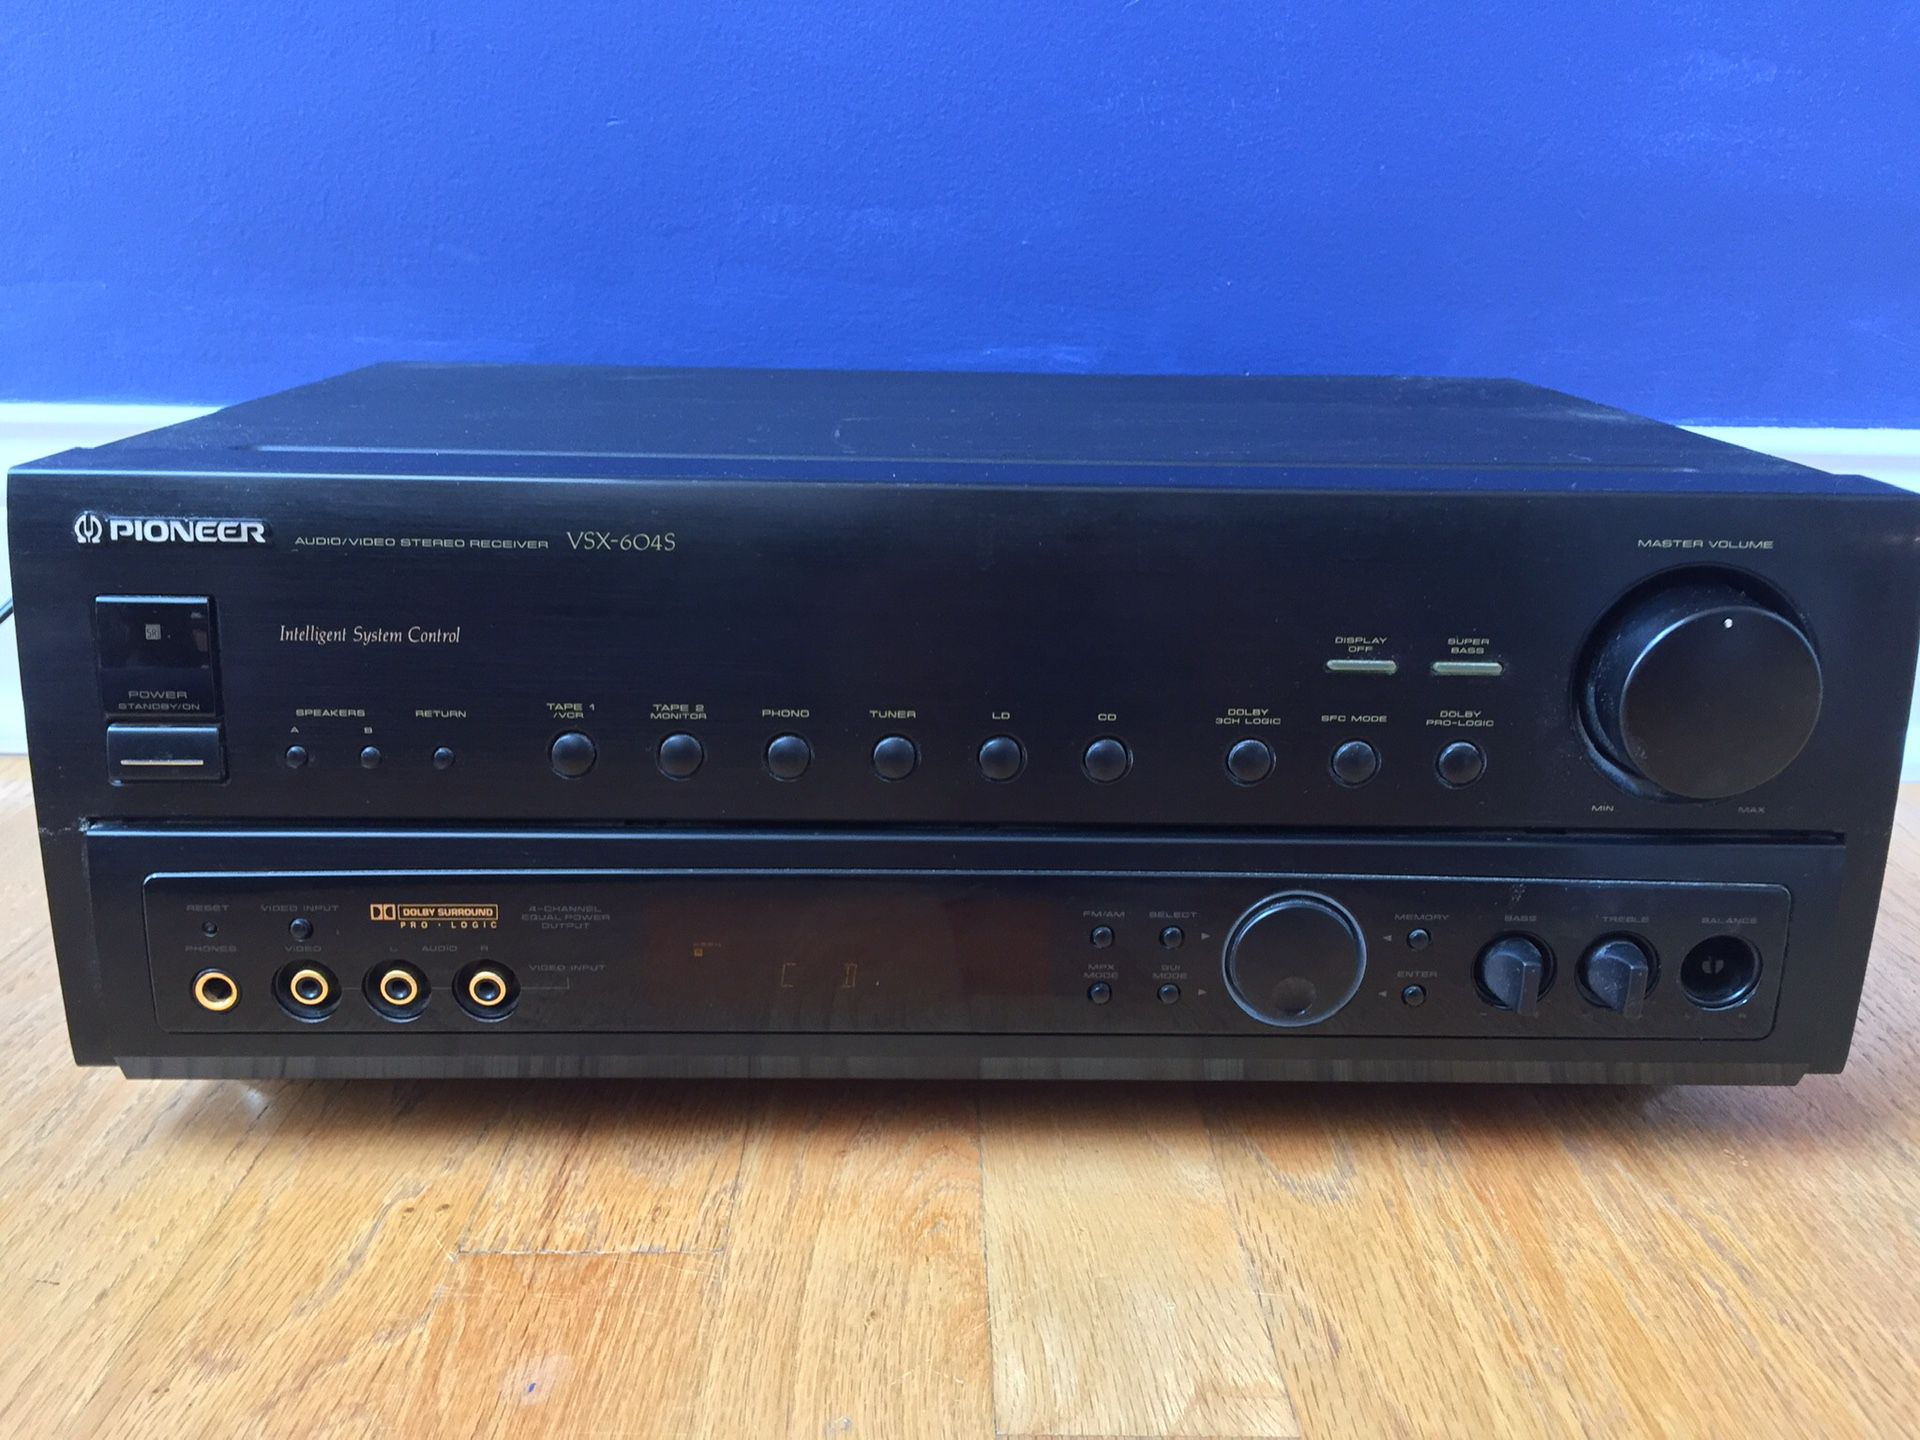 Pioneer VSX-604S 5.1 Home Theater Surround Sound Multizone AV Stereo Receiver Amplifier